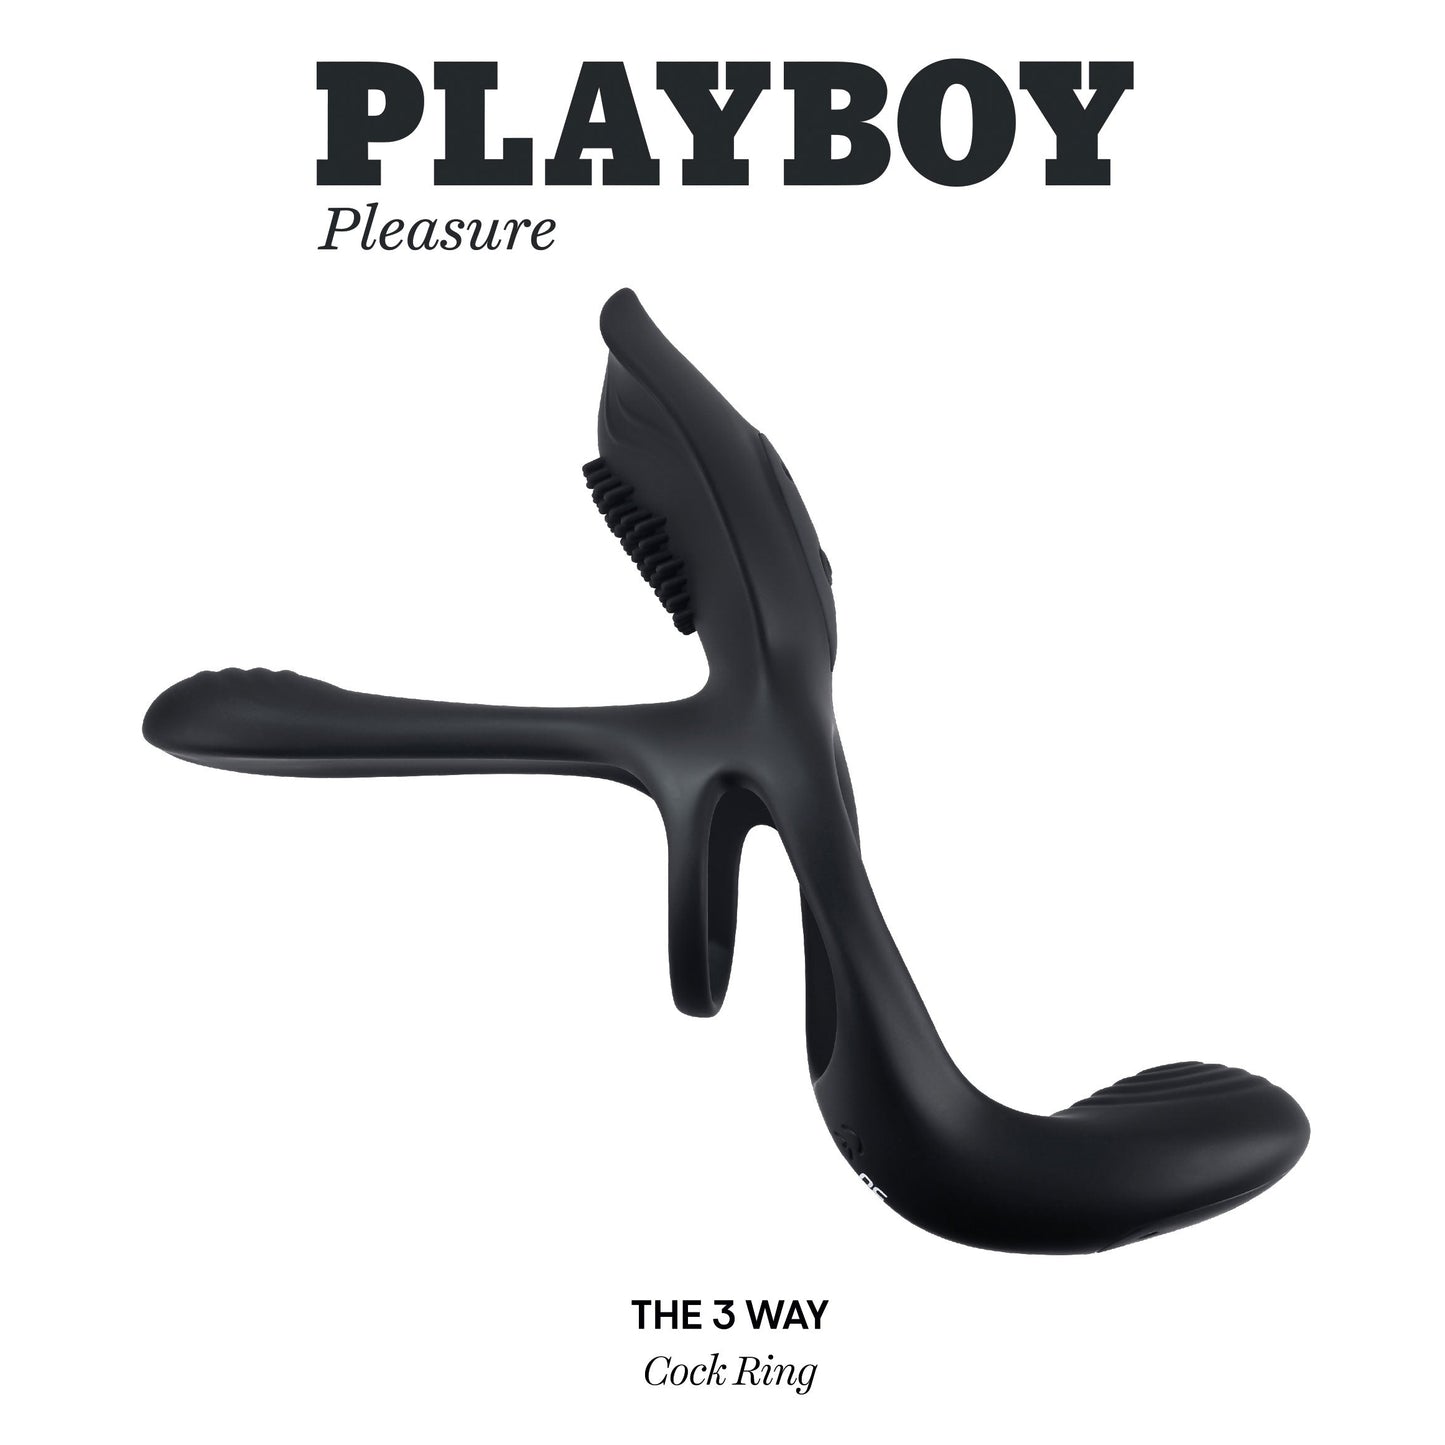 Playboy Pleasure - the 3 Way - Cock Ring - Black